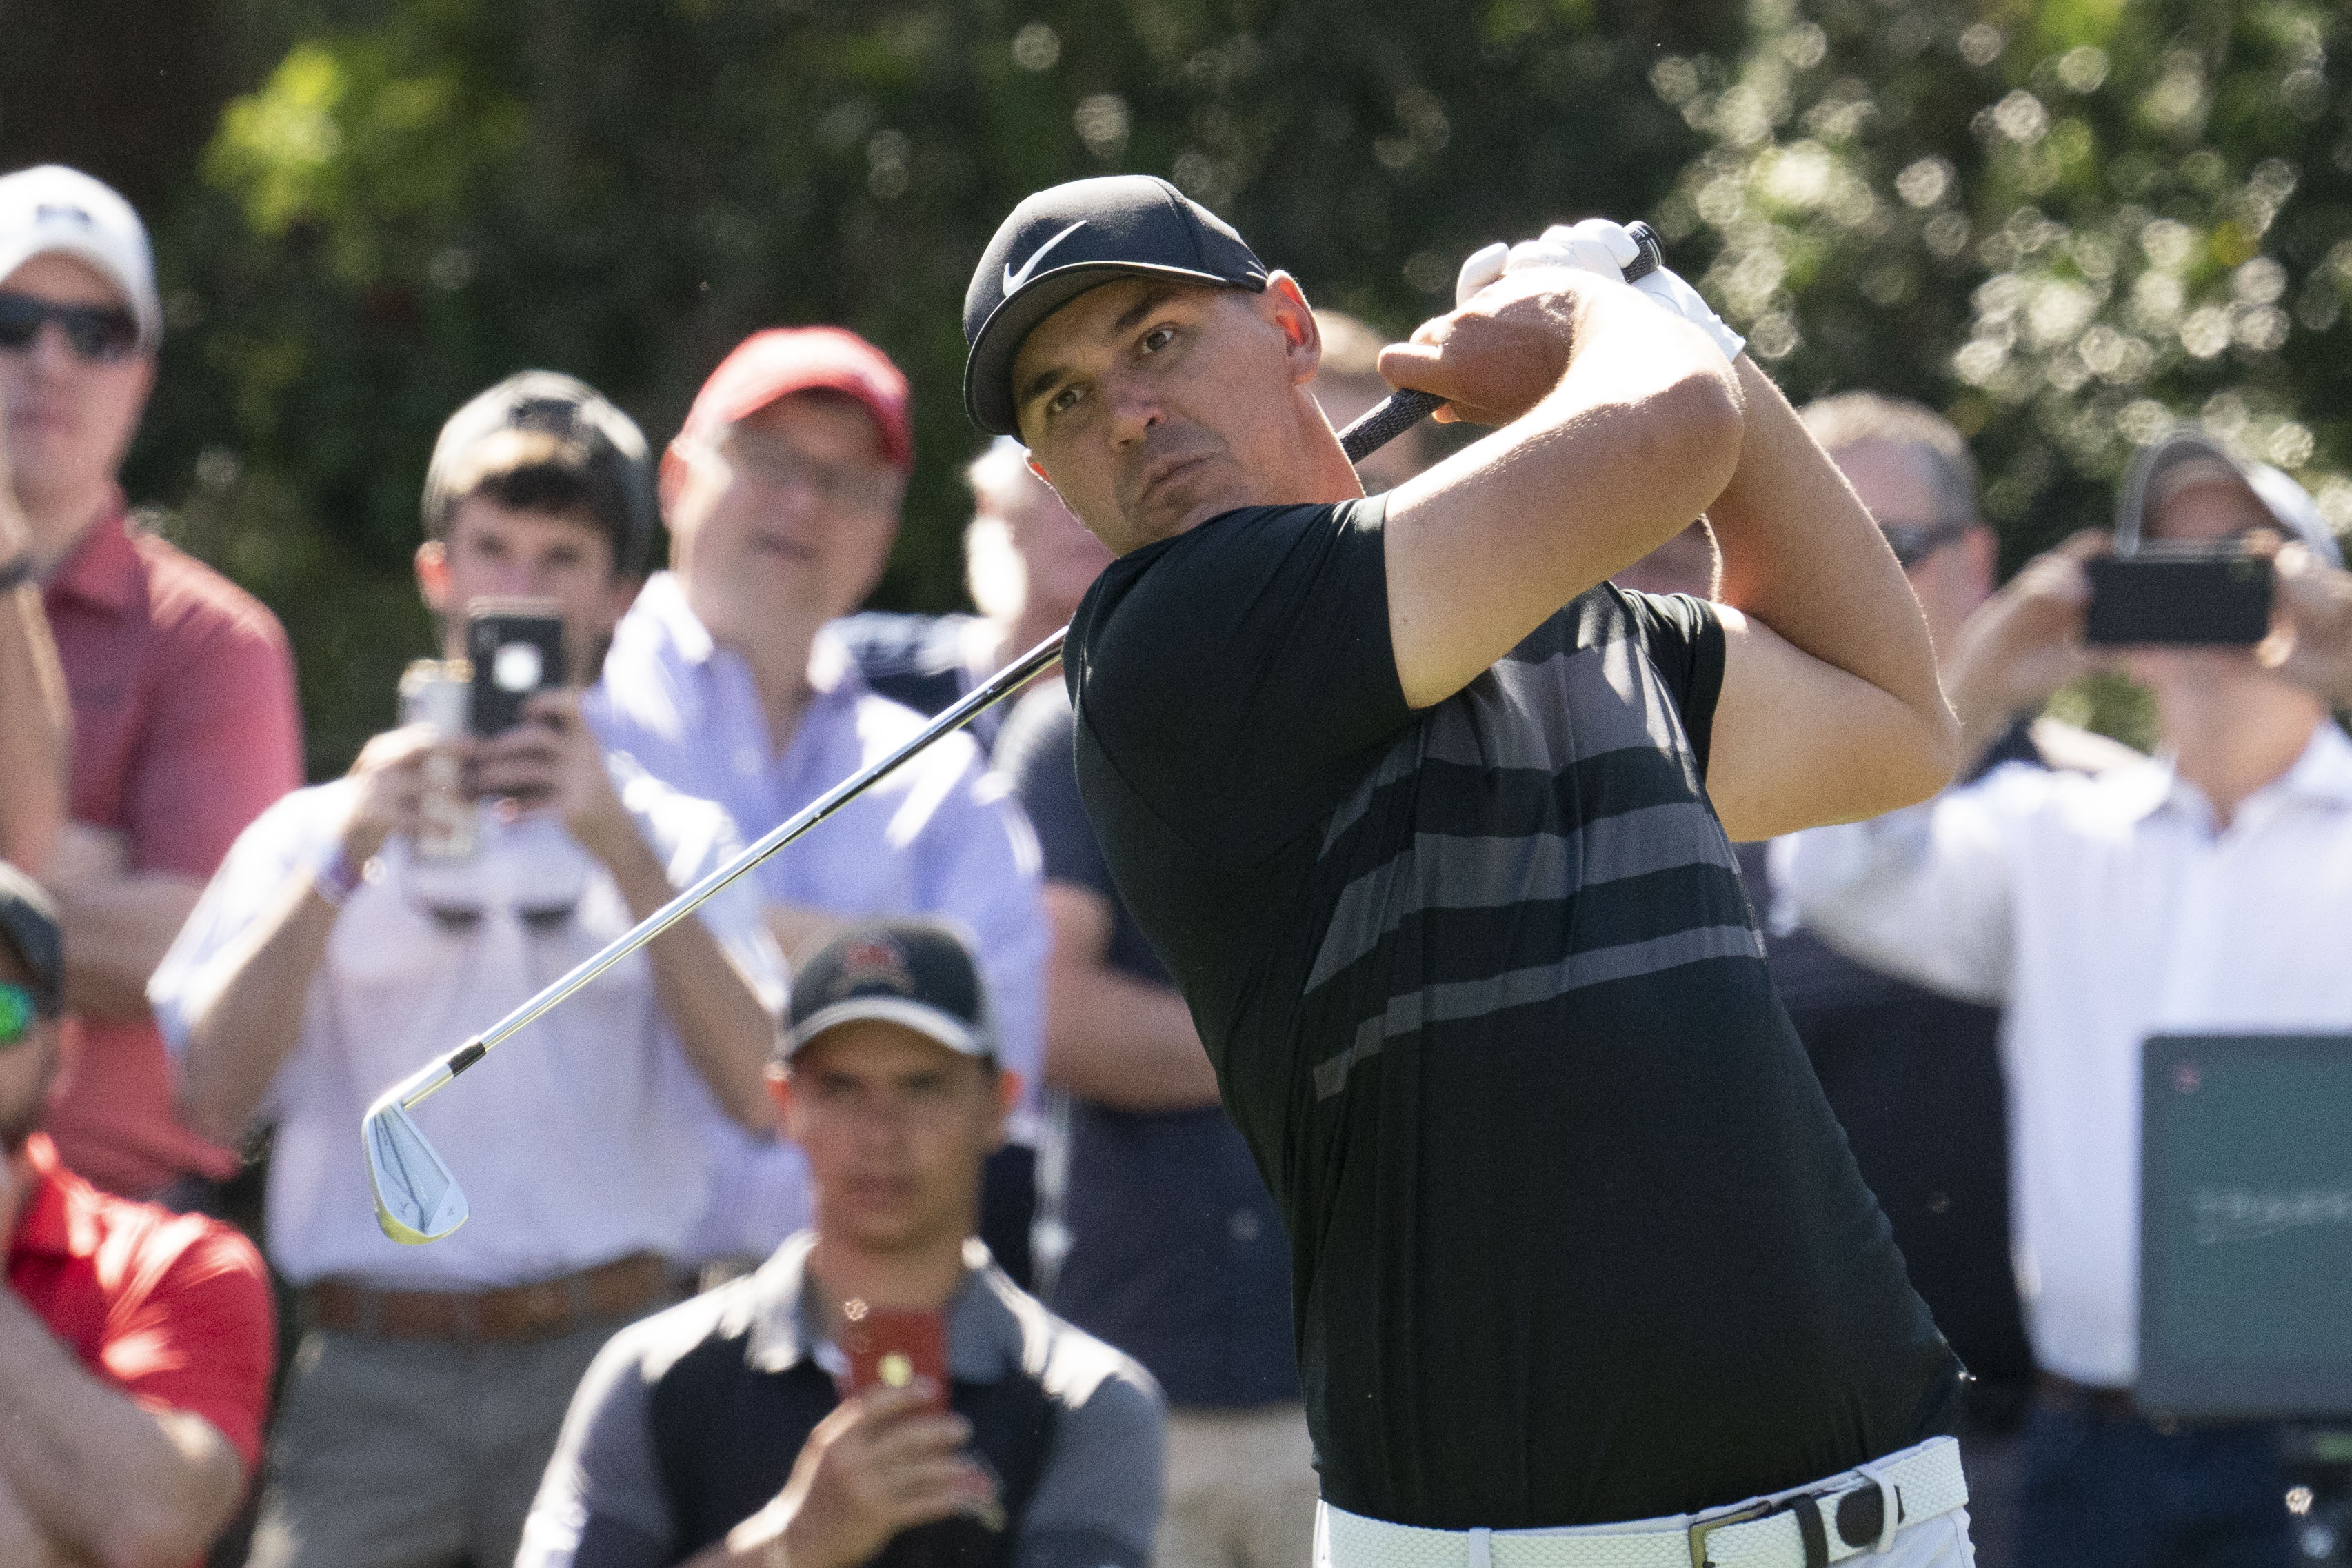 95% of GolfMagic readers say coronavirus won't stop them playing golf